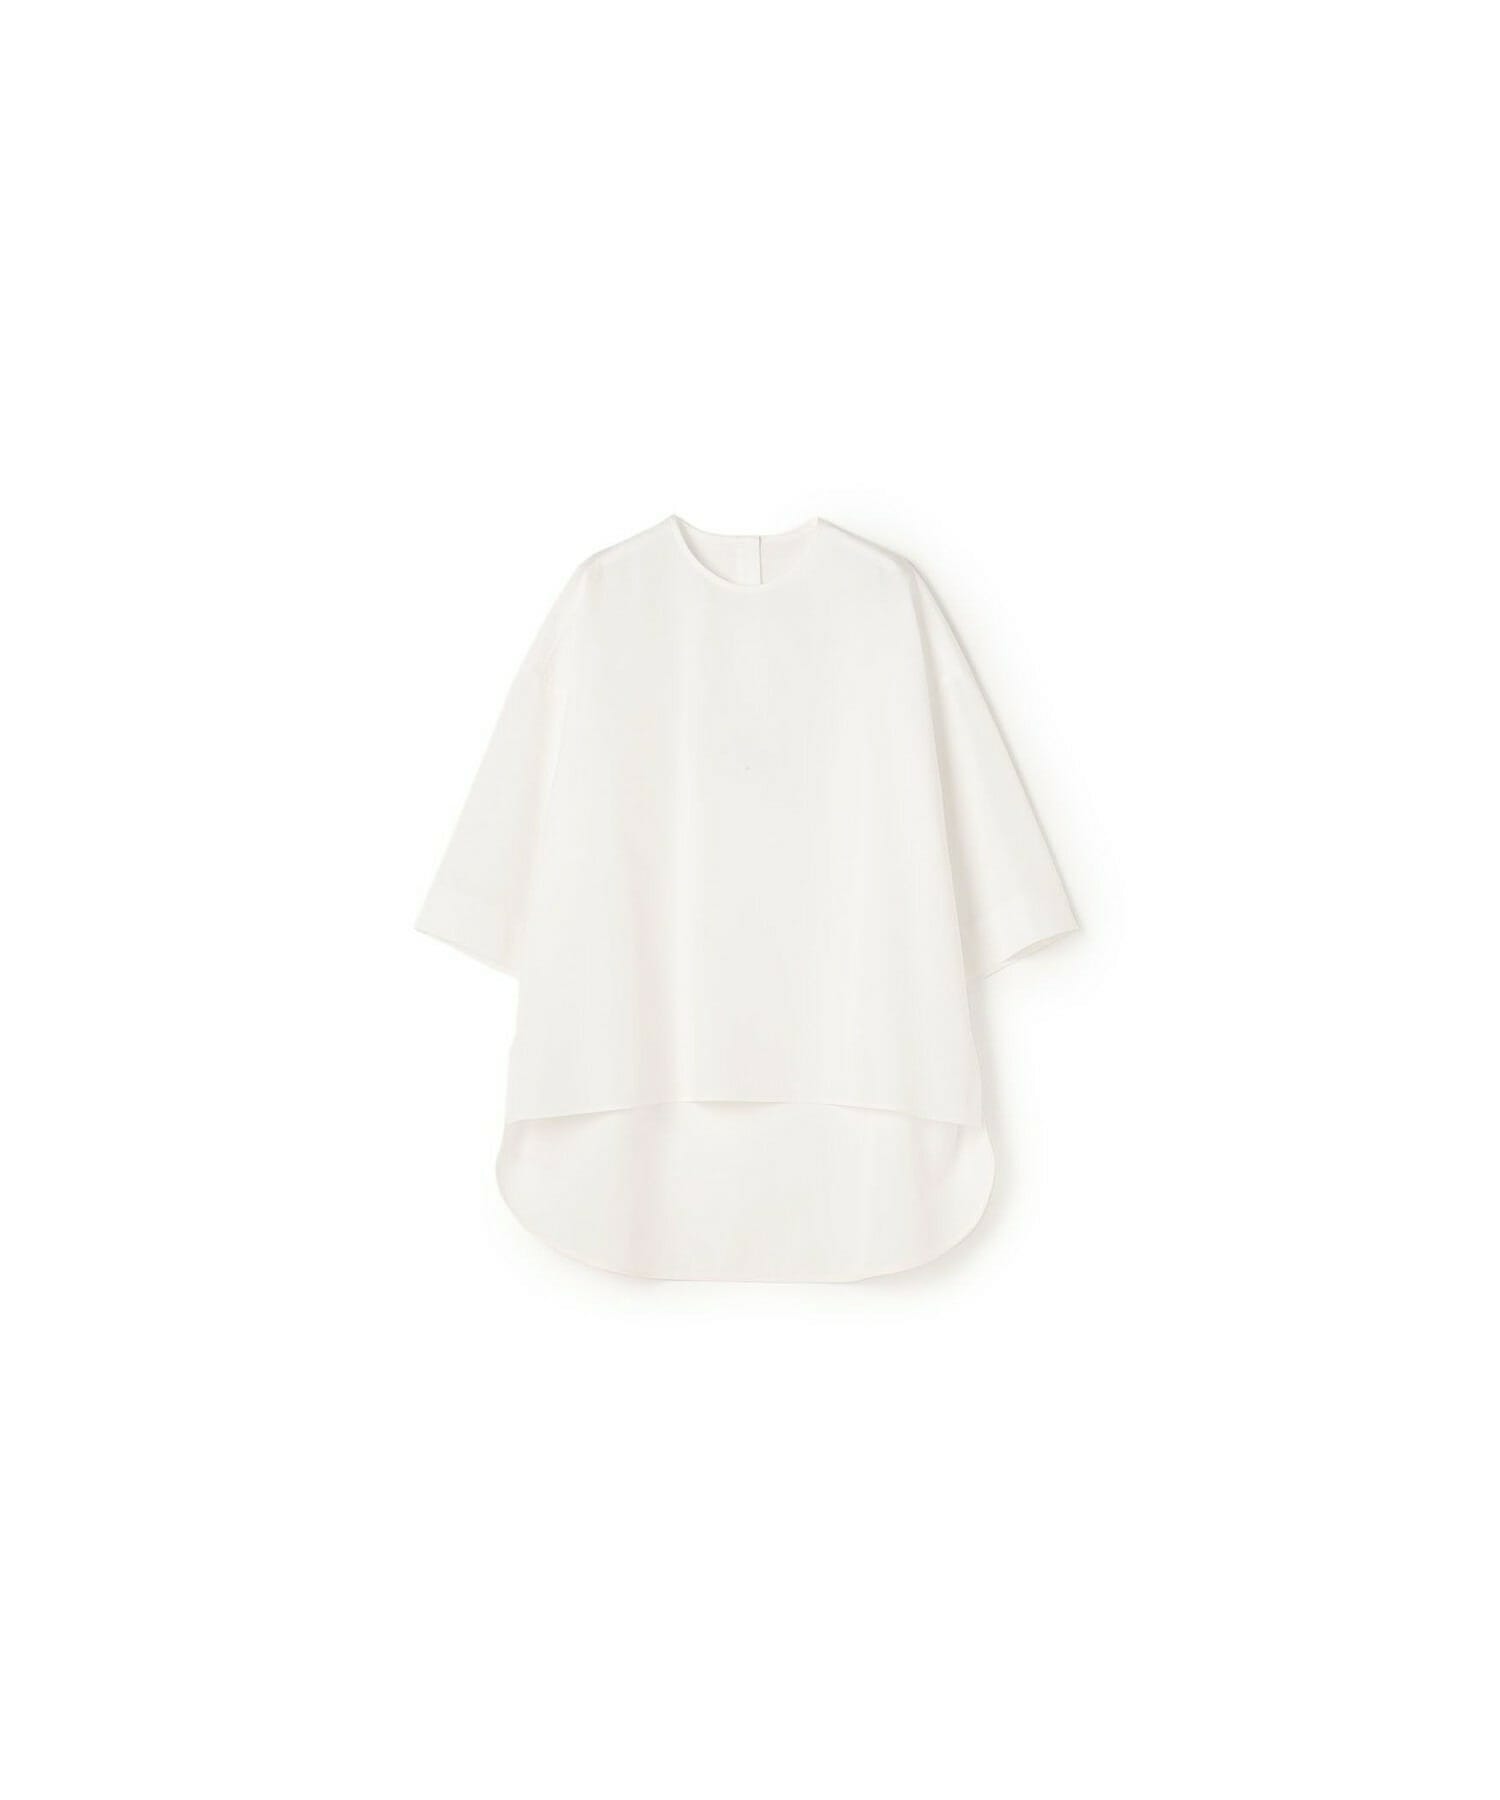 【yoshie inaba】コットンポプリンビッグシルエットシャツ 詳細画像 ホワイト 1